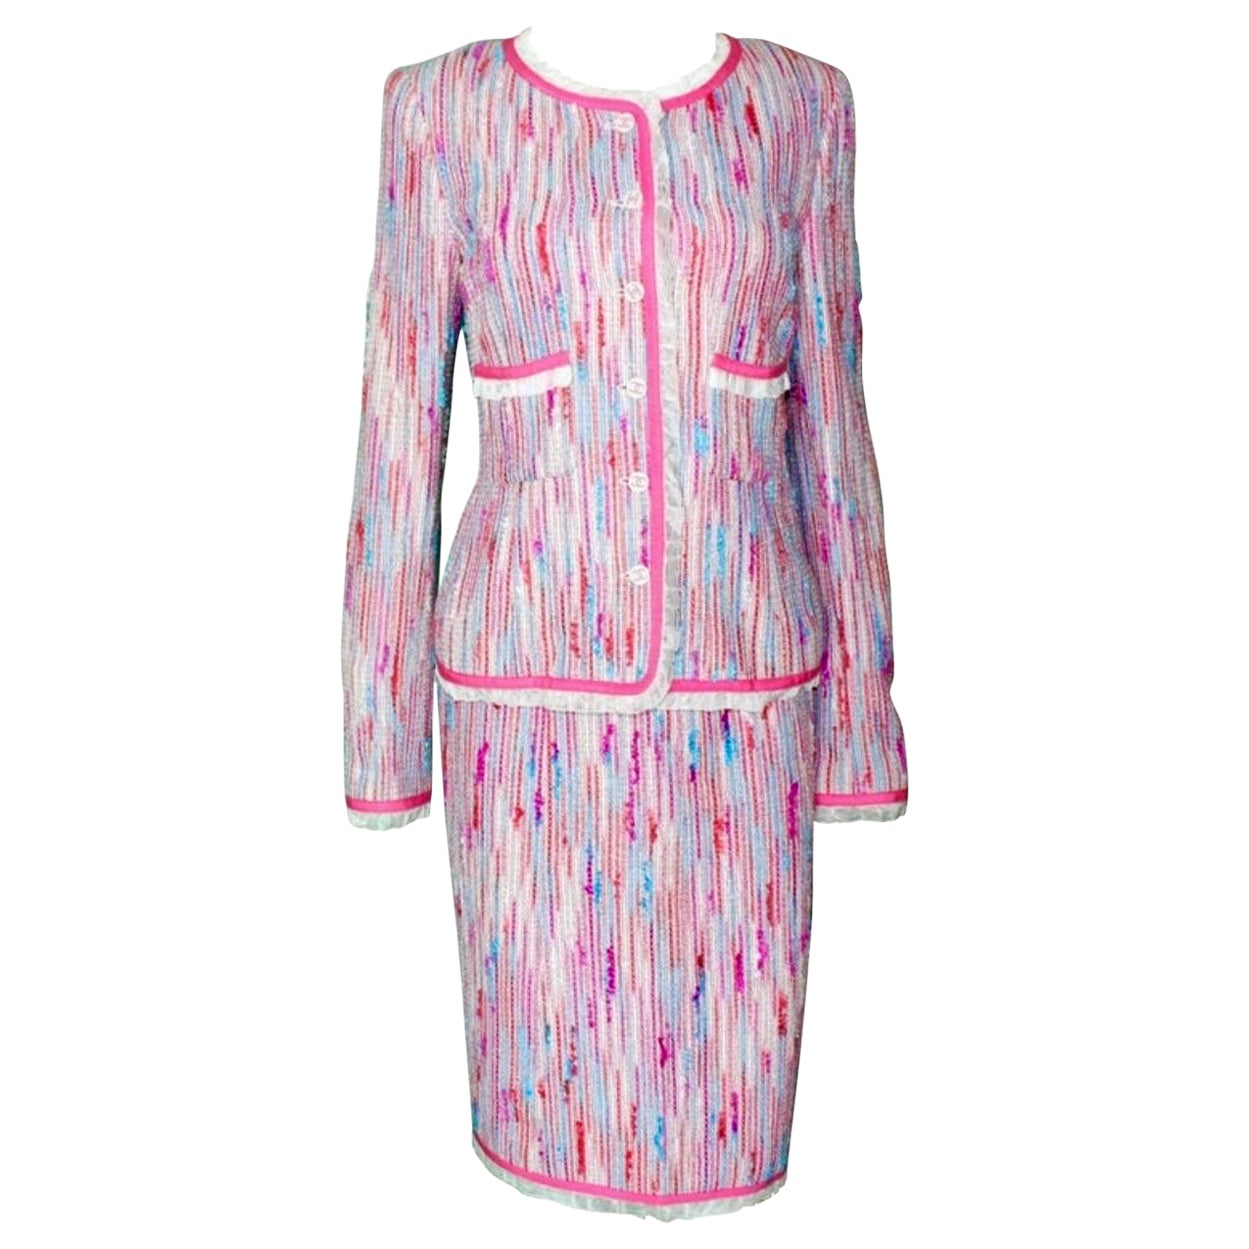 CHANEL Pink "Barbie" Tweed Top Skirt & Jacket 3 PCS Suit Ensemble 38/40 For Sale